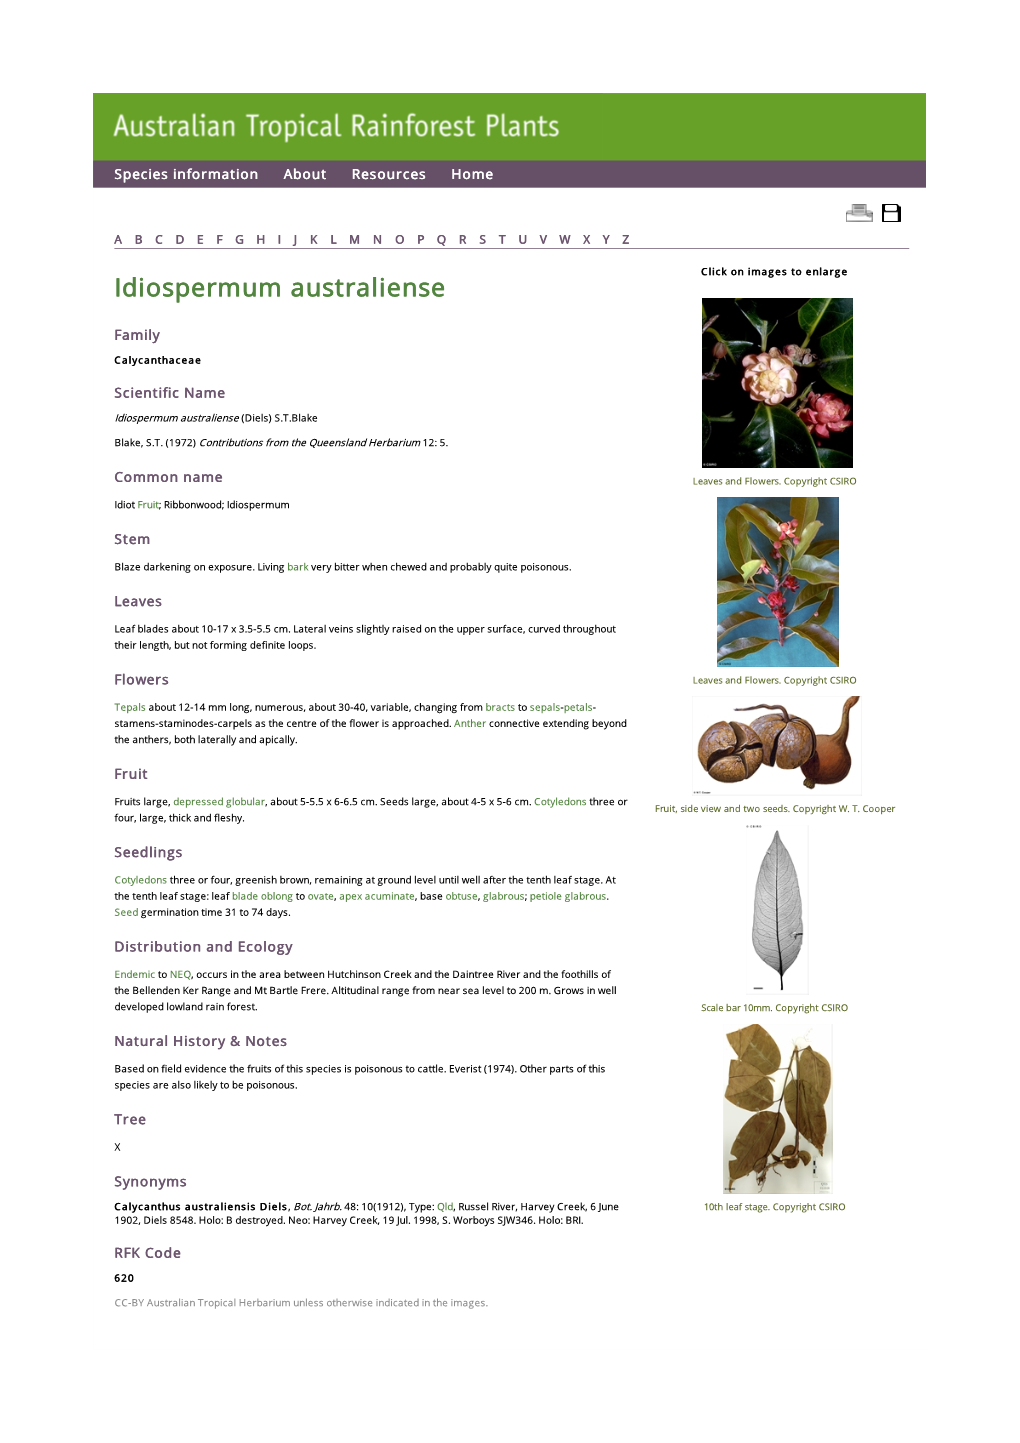 Idiospermum Australiense Click on Images to Enlarge